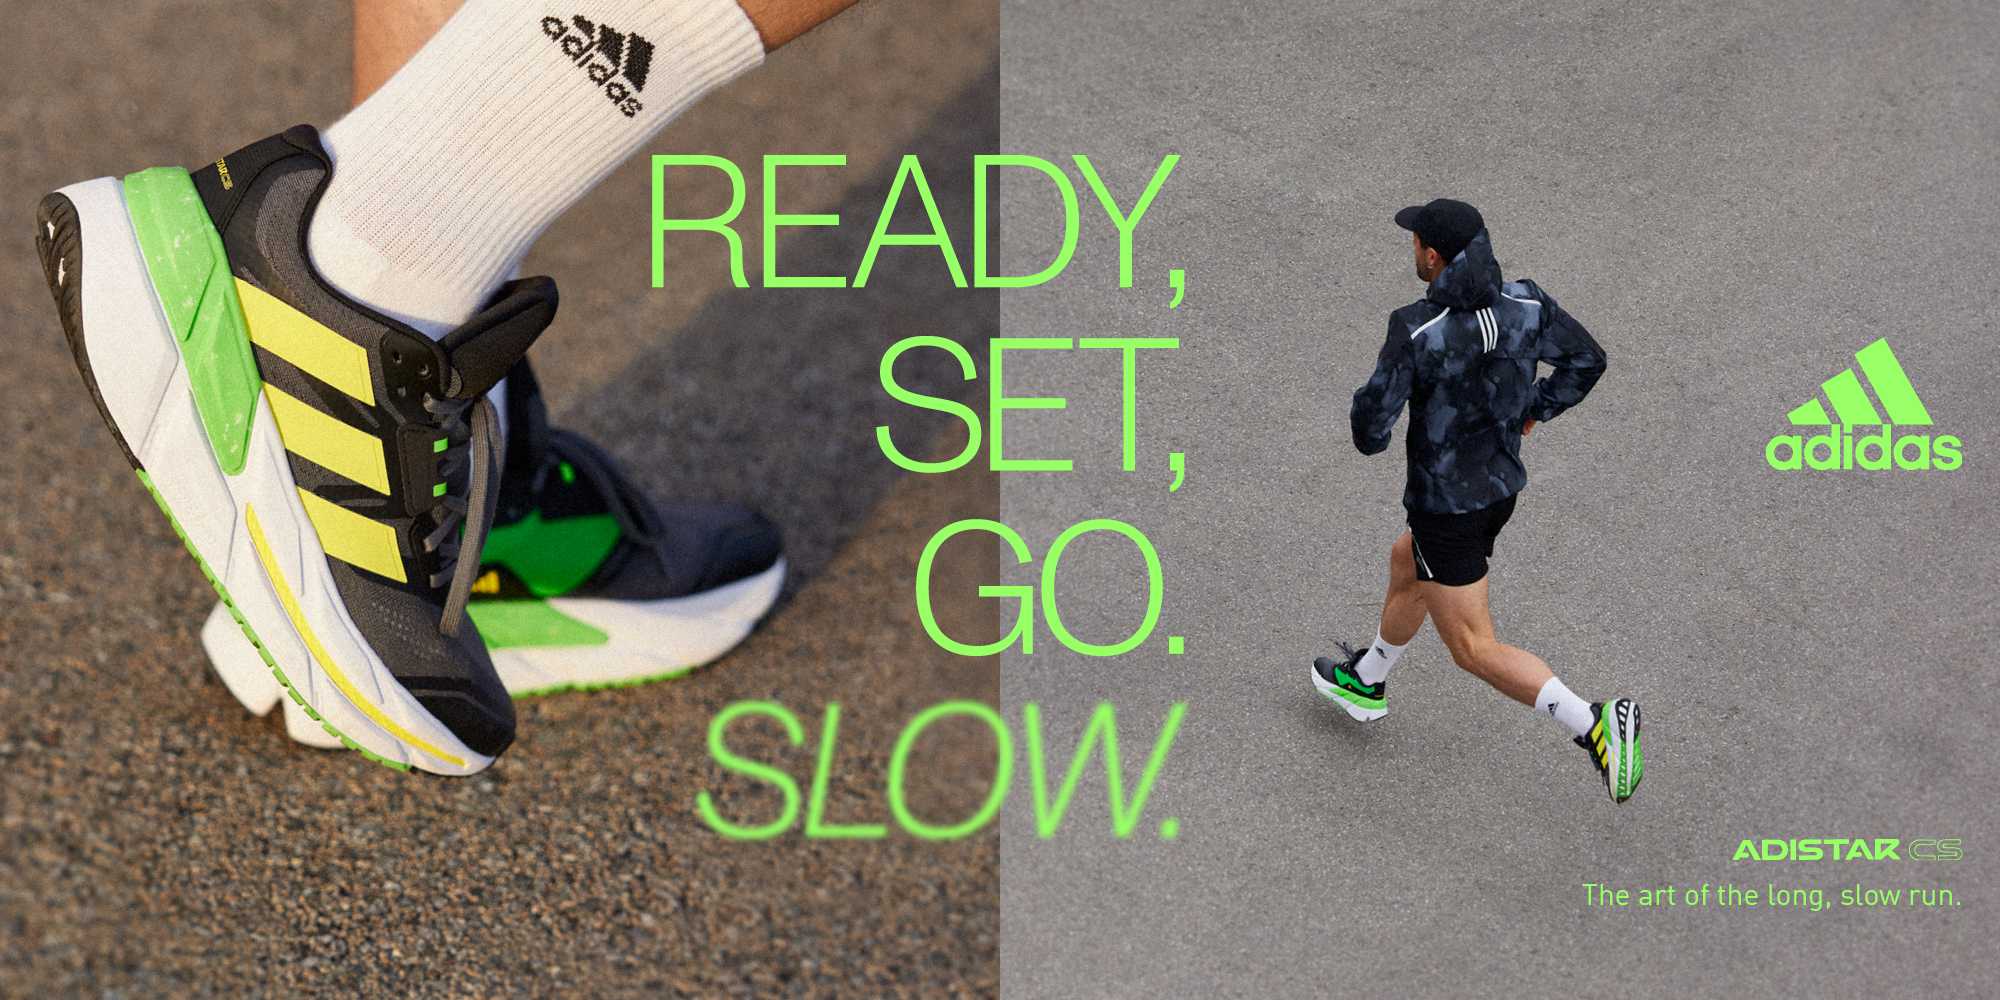 adidas近日推出 Adistar CS跑鞋是款幫助跑者探索距離潛力的長距離慢跑訓練鞋款。官方提供